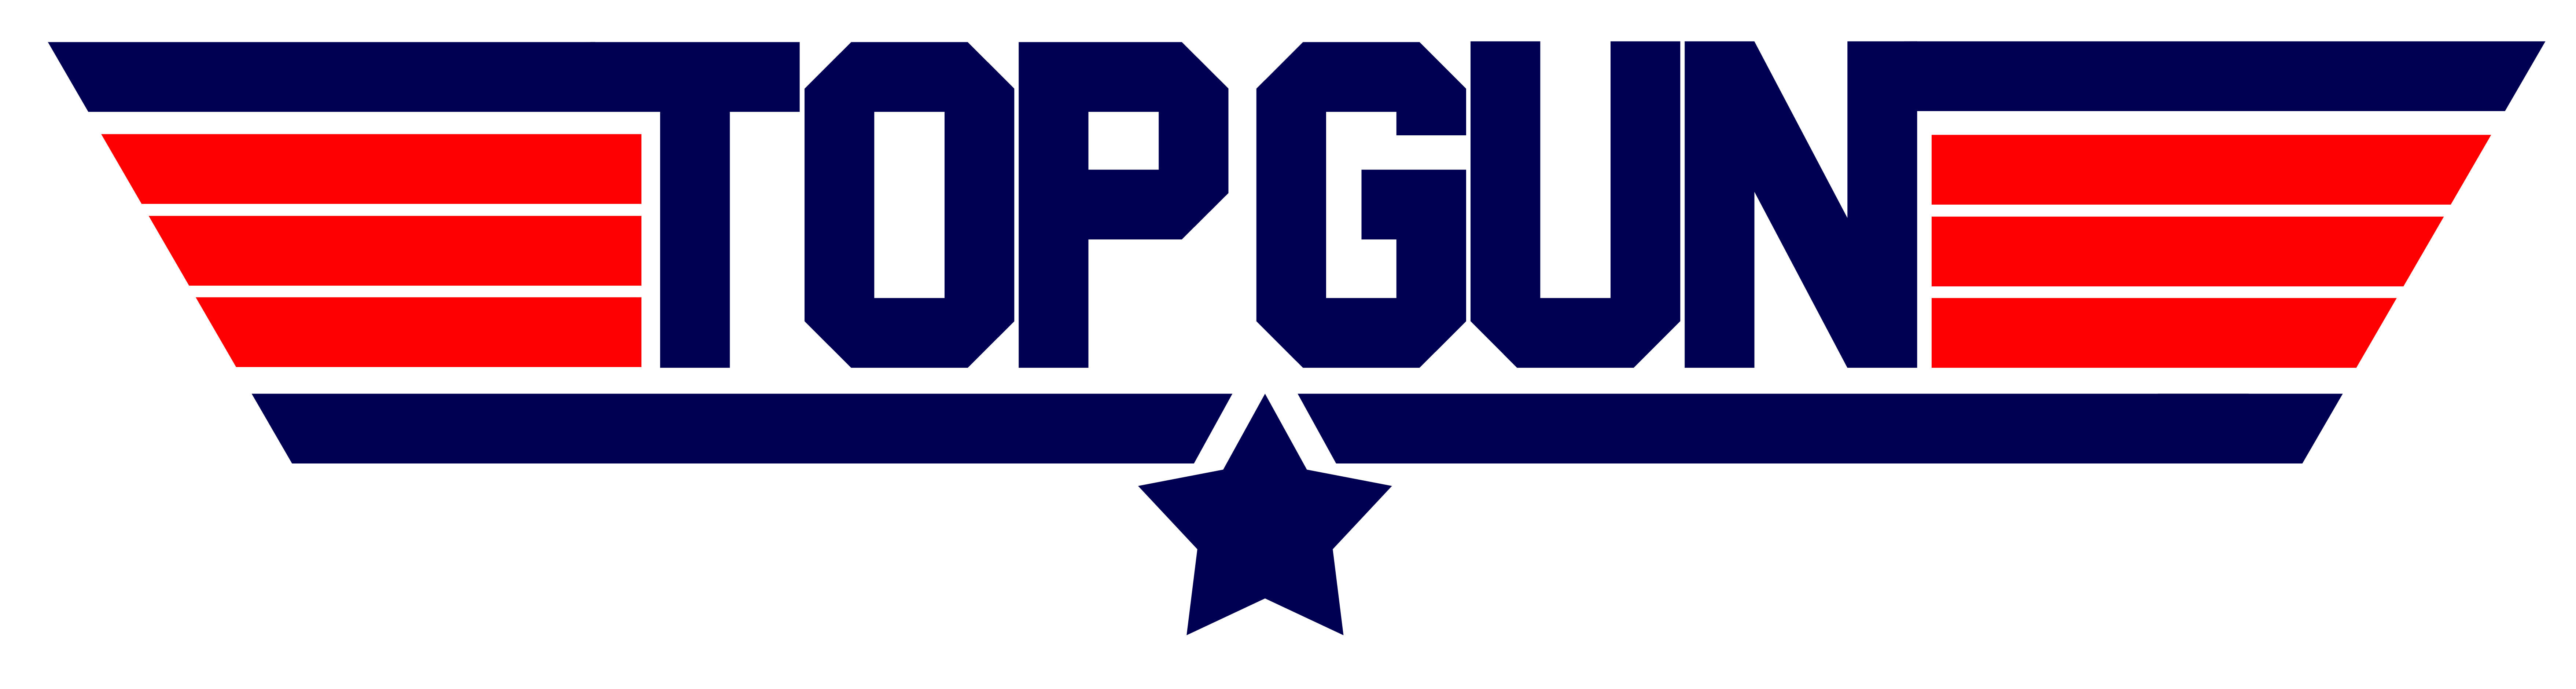 Top Gun Maverick Logo Wallpaper